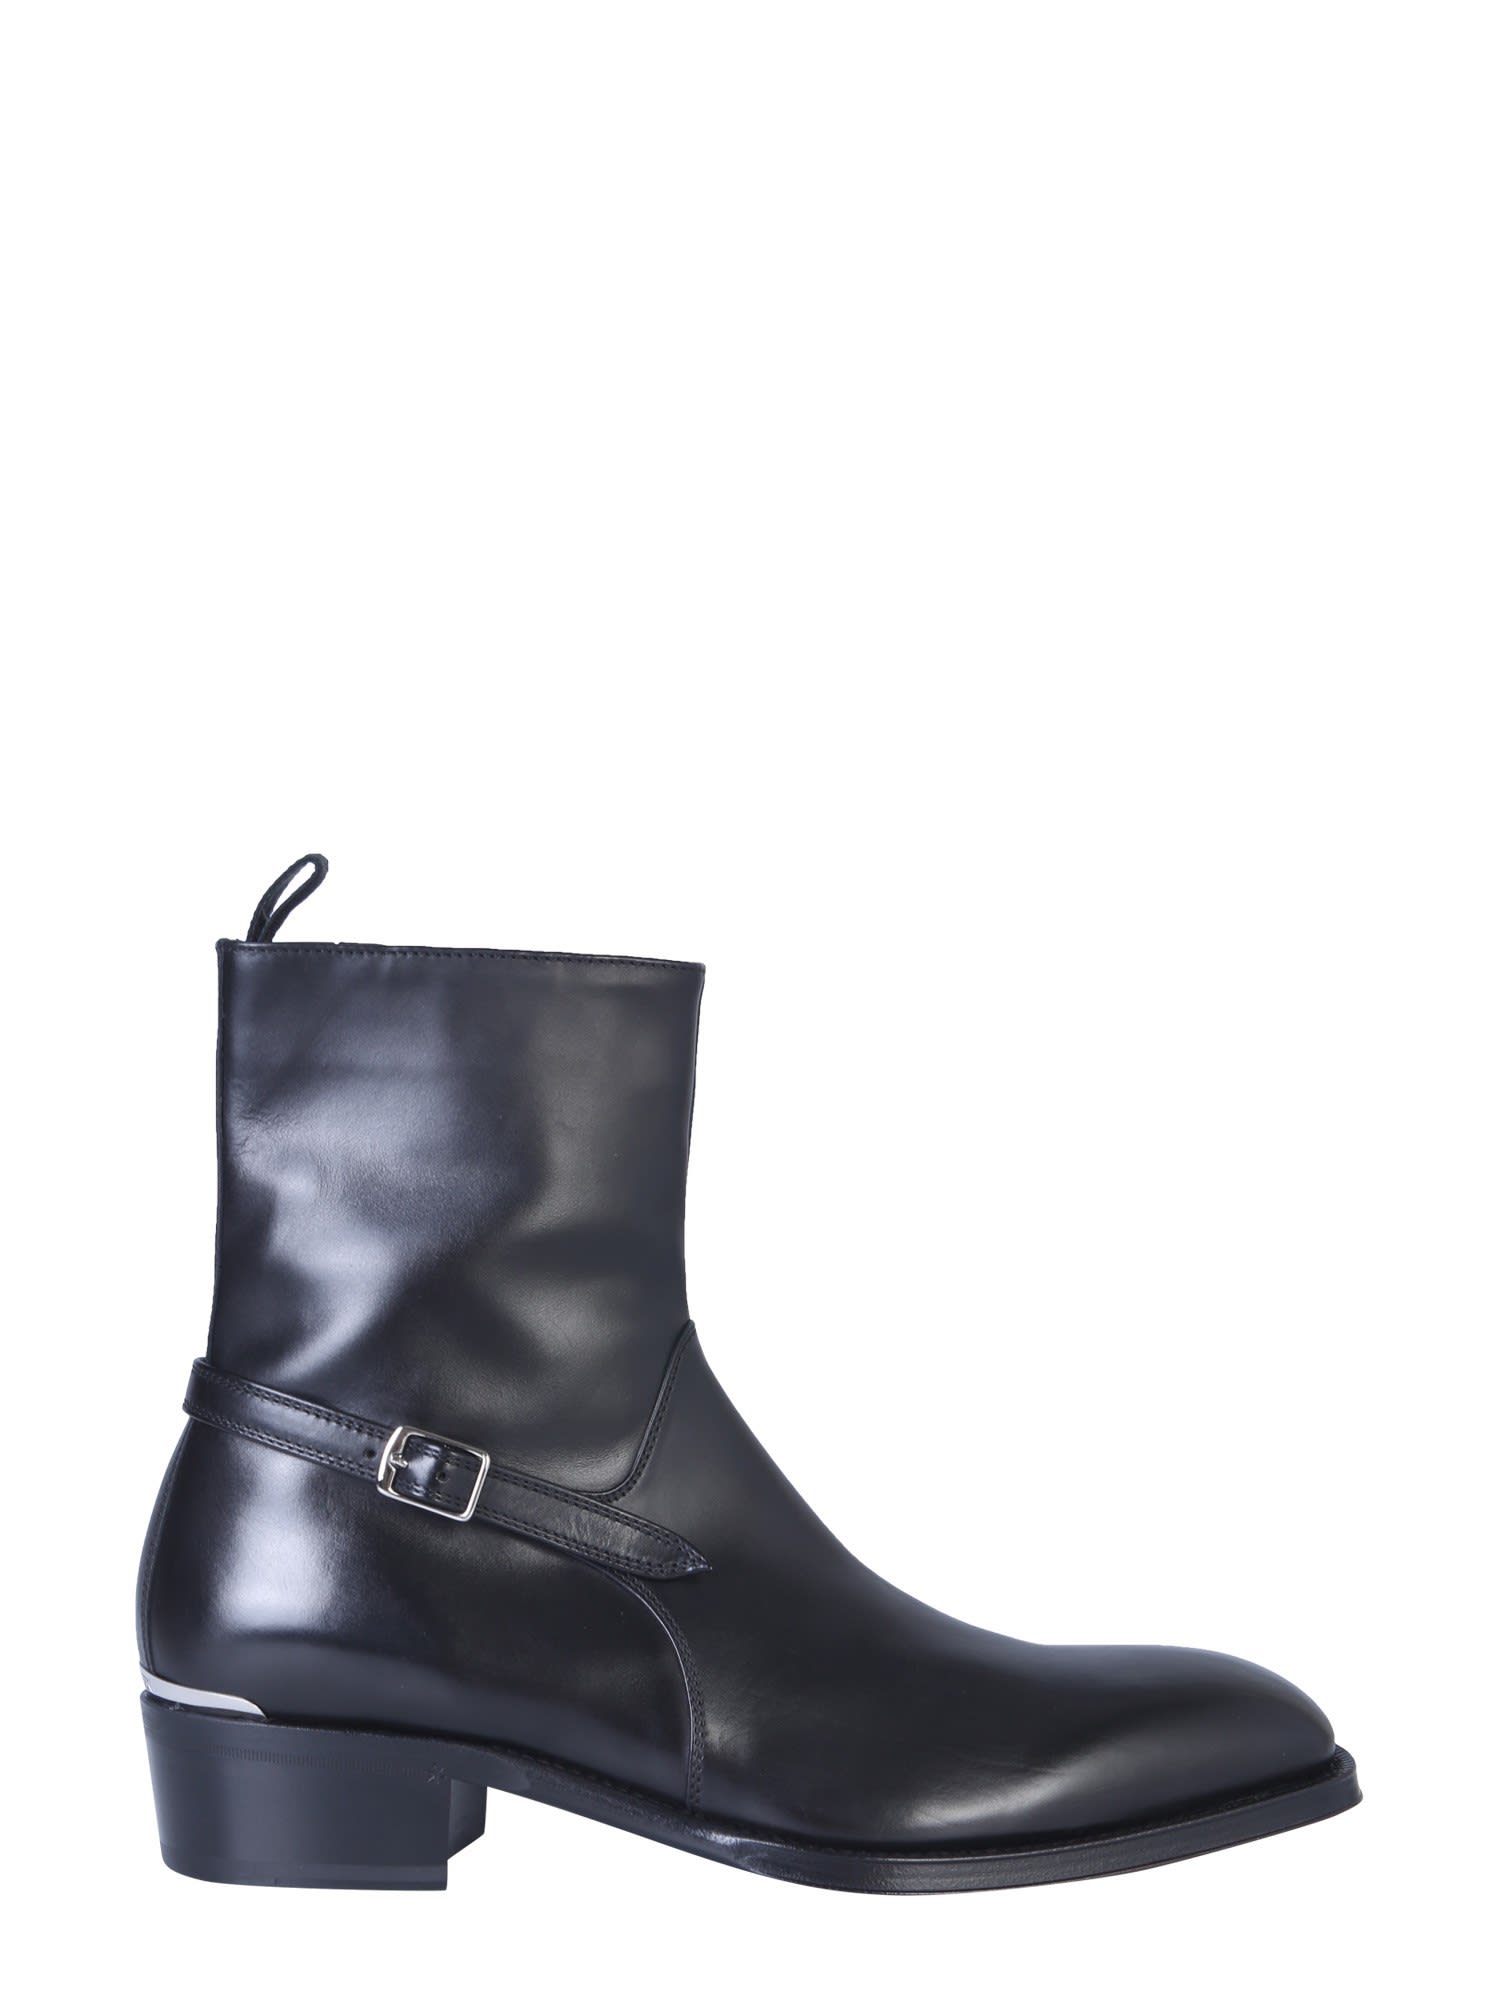 Alexander McQueen Boots | italist, ALWAYS LIKE A SALE